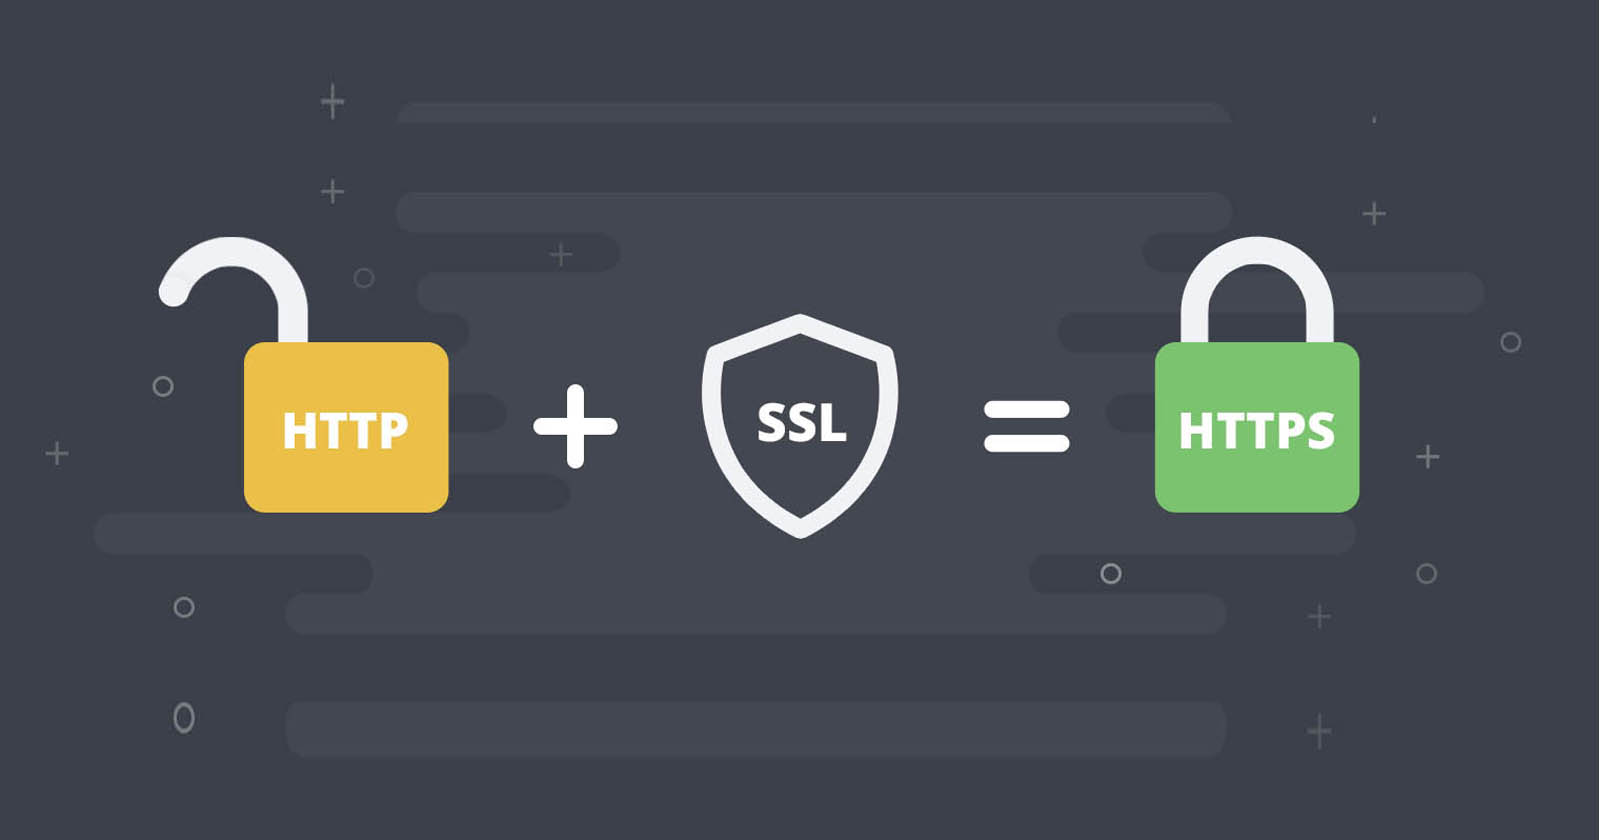 Https. Http+SSL=https. PS Hits. Https-протокол картинки. Https6.